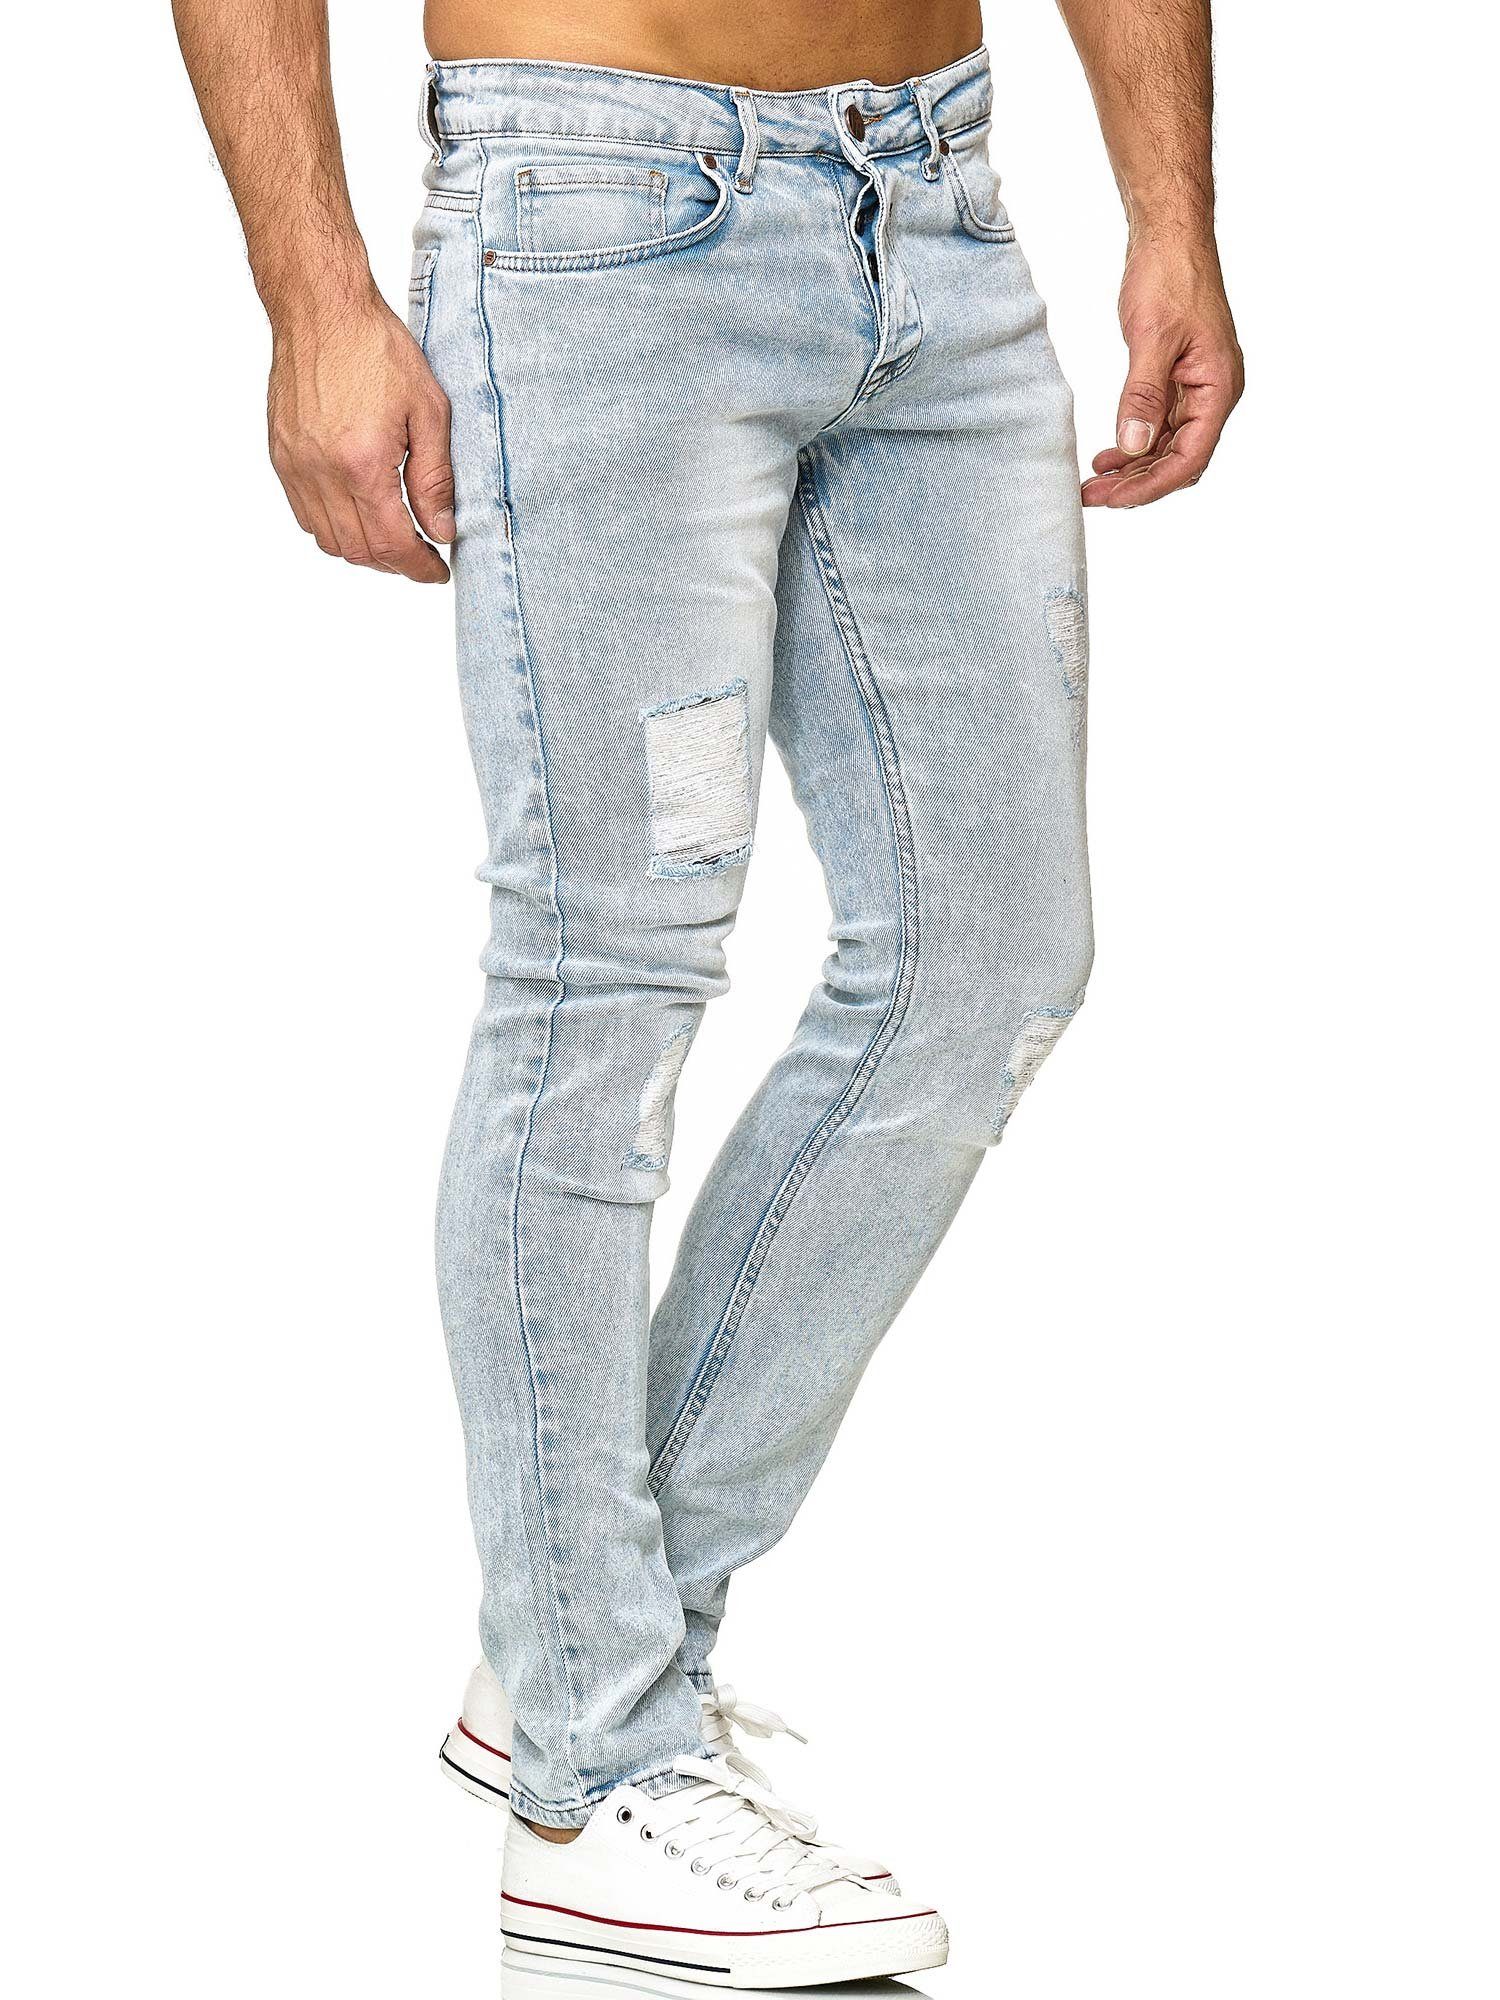 Tazzio Slim-fit-Jeans 16525 Stretch mit Elasthan & im Destroyed-Look hellblau